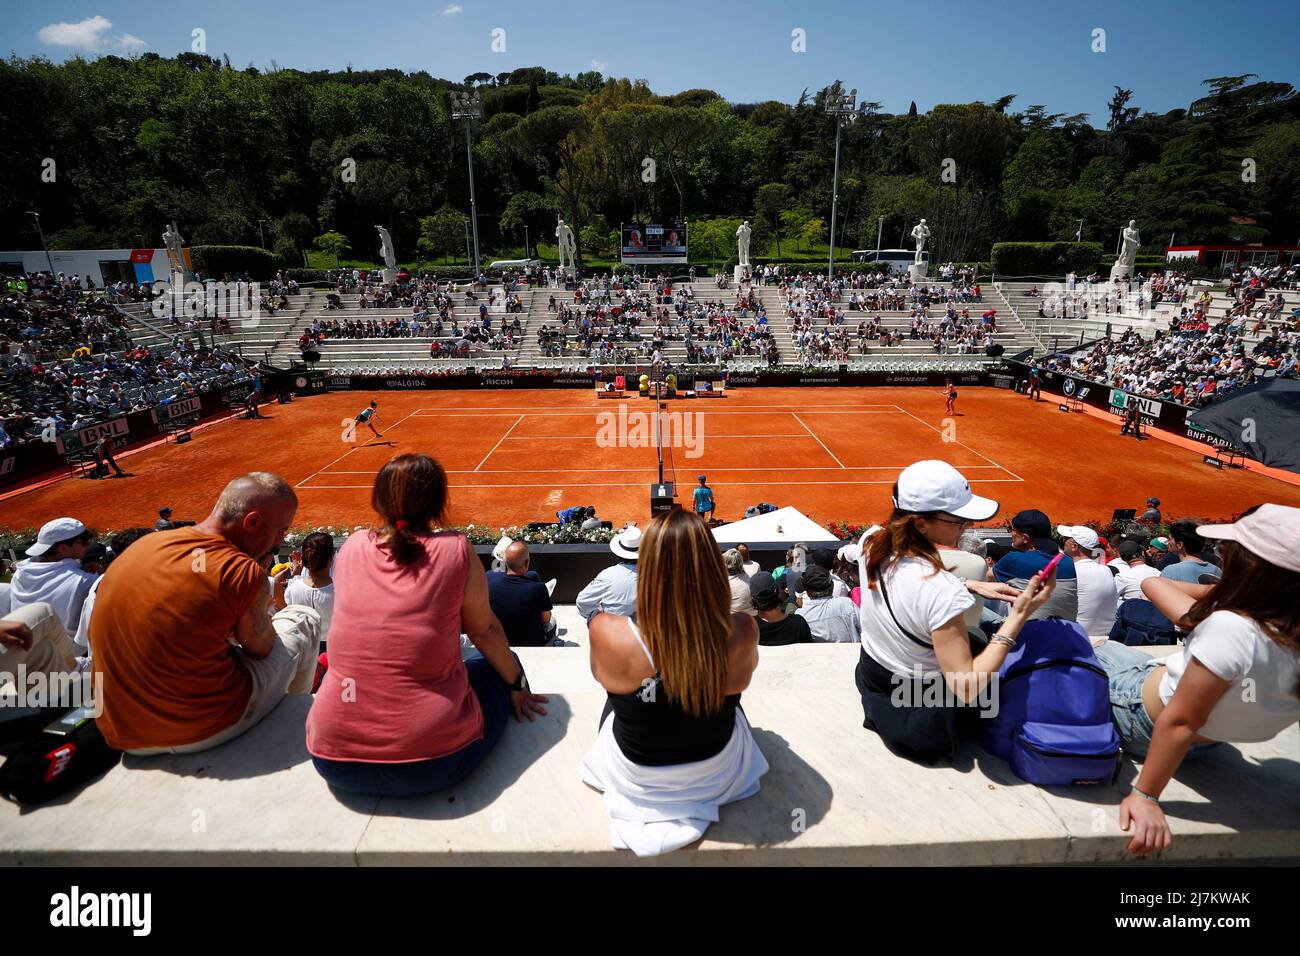 Tennis - WTA 1000 - Italian Open - Foro Italico, Rome, Italy - May 10, 2022  General view of the